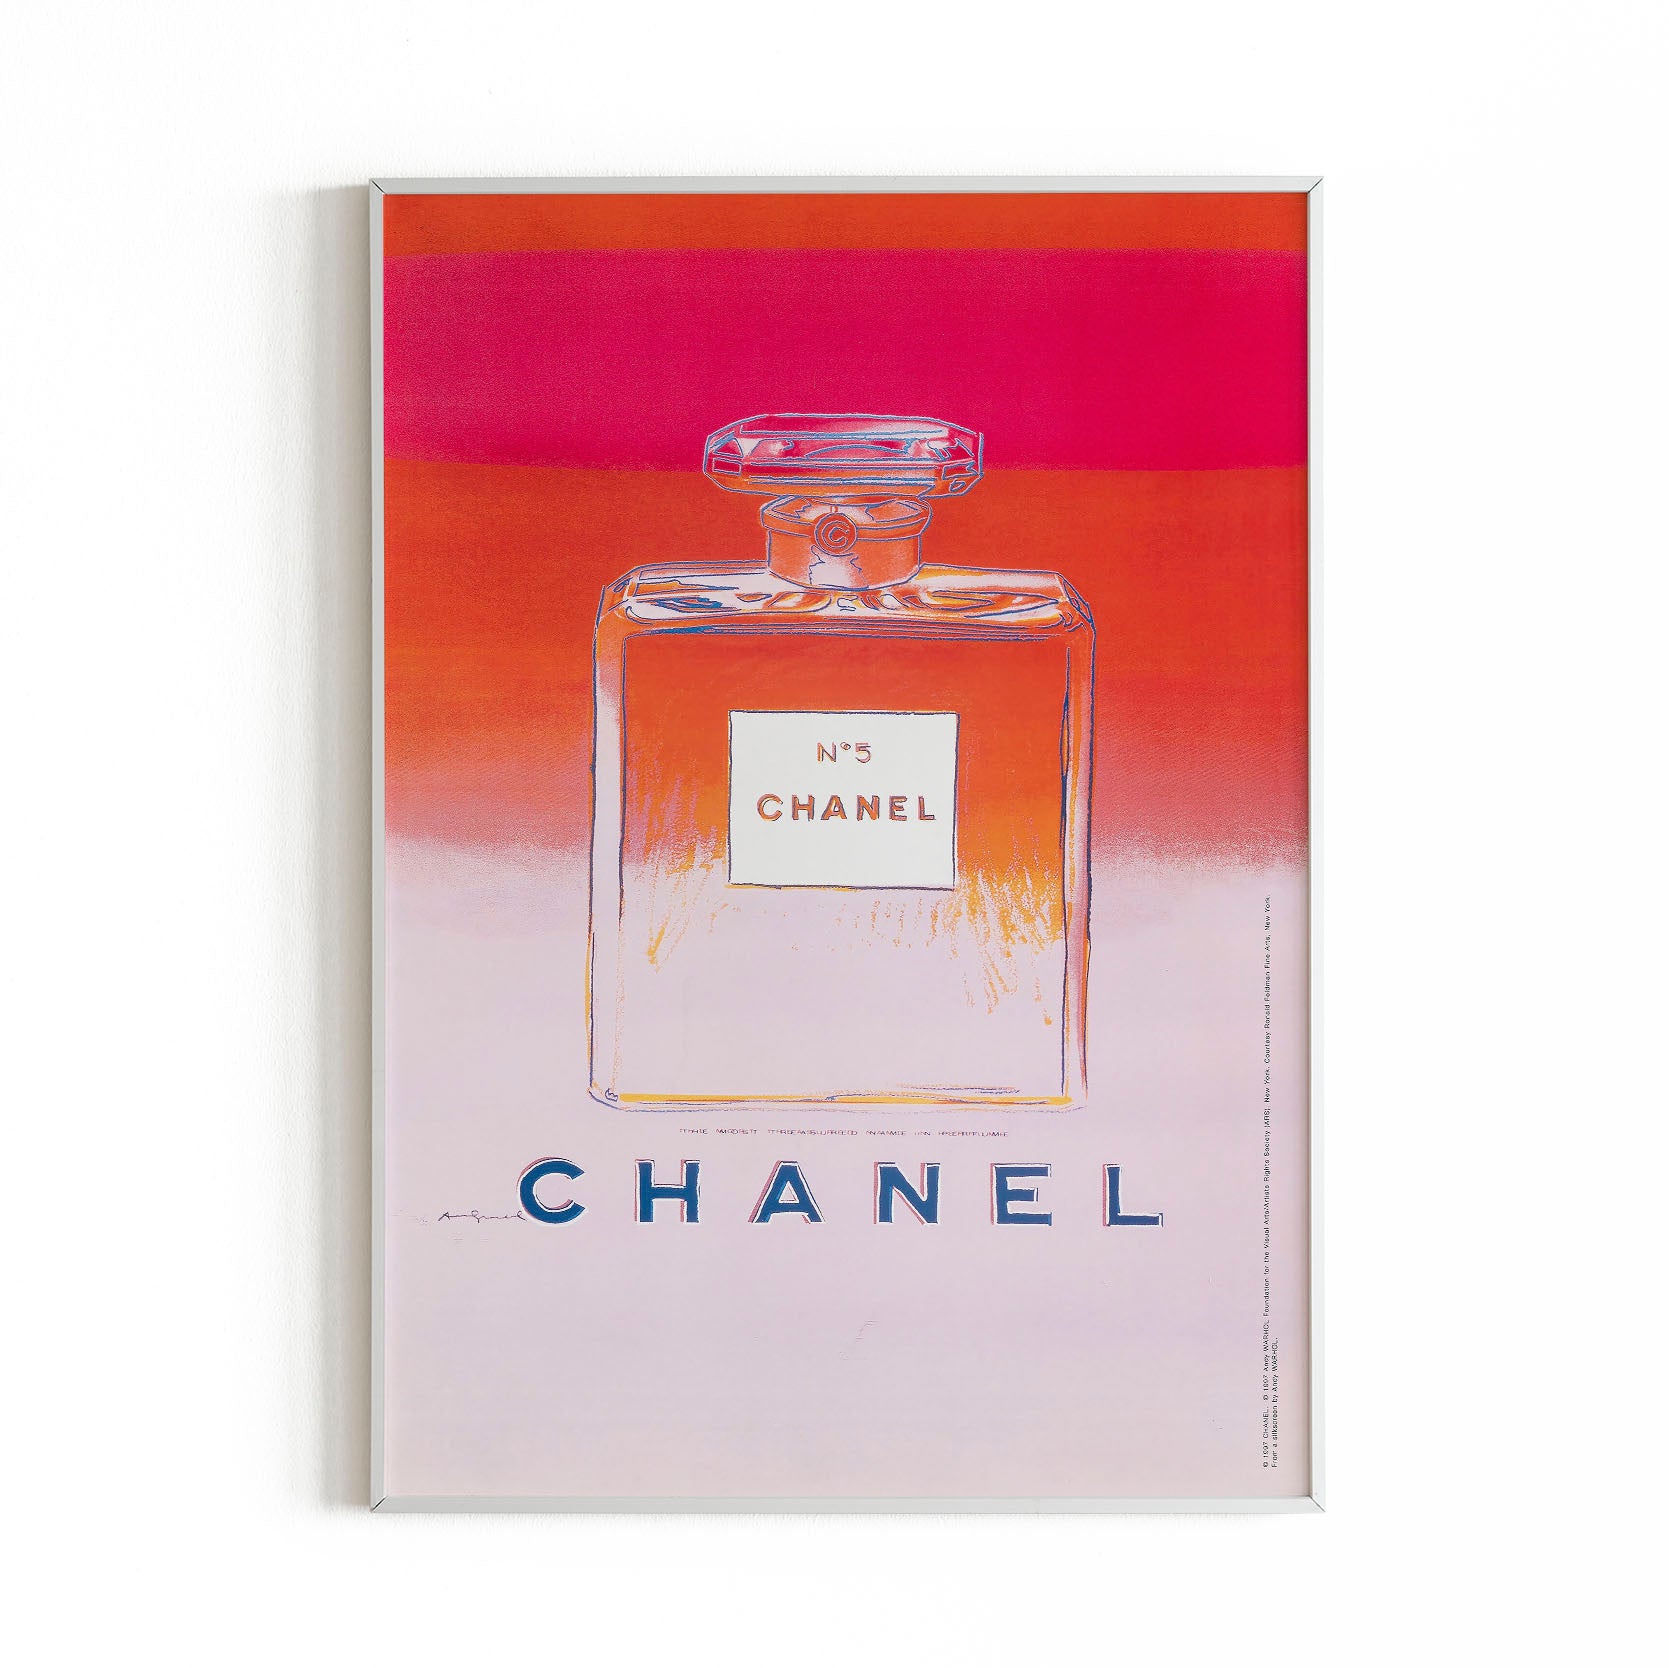 Chanel No5 Perfume Original Advert 1966 ref AD11208  The Nostalgia Shop